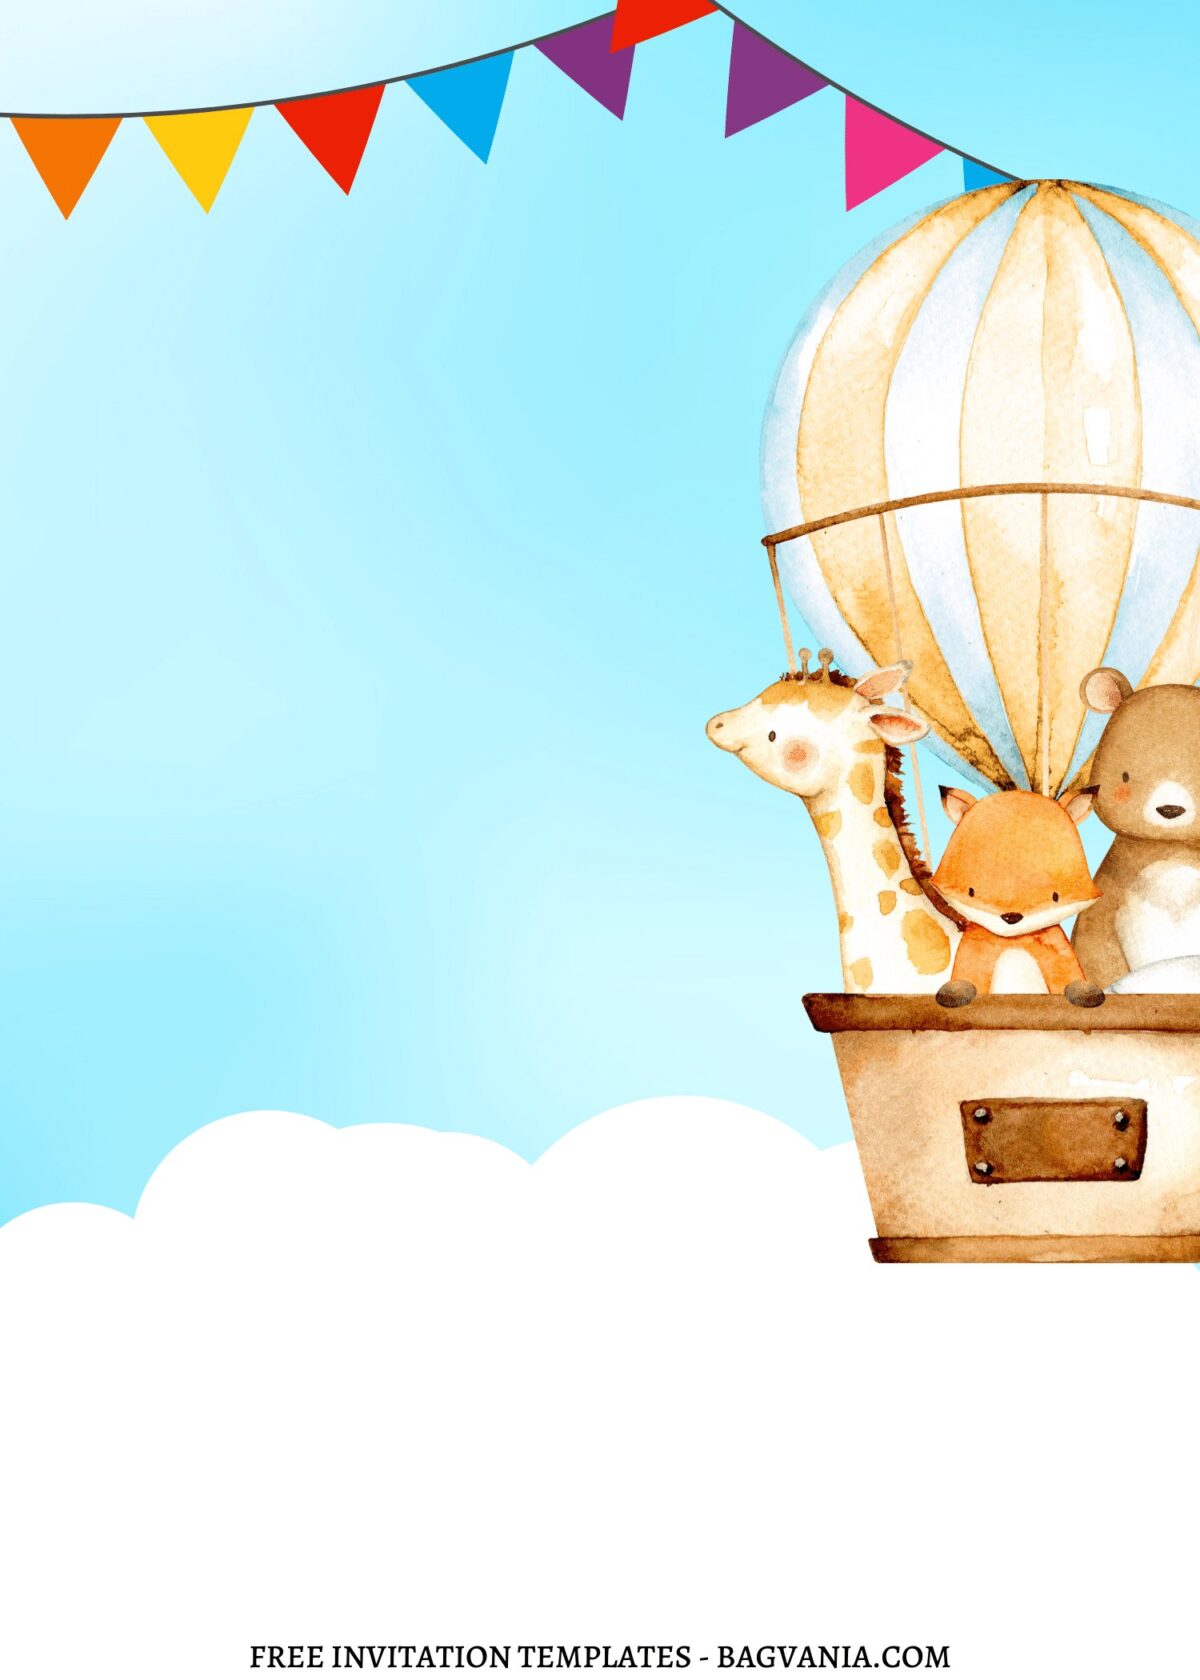 FREE EDITABLE - 10+ Safari Hot Air Balloon Canva Birthday Invitation Templates with watercolor giraffe